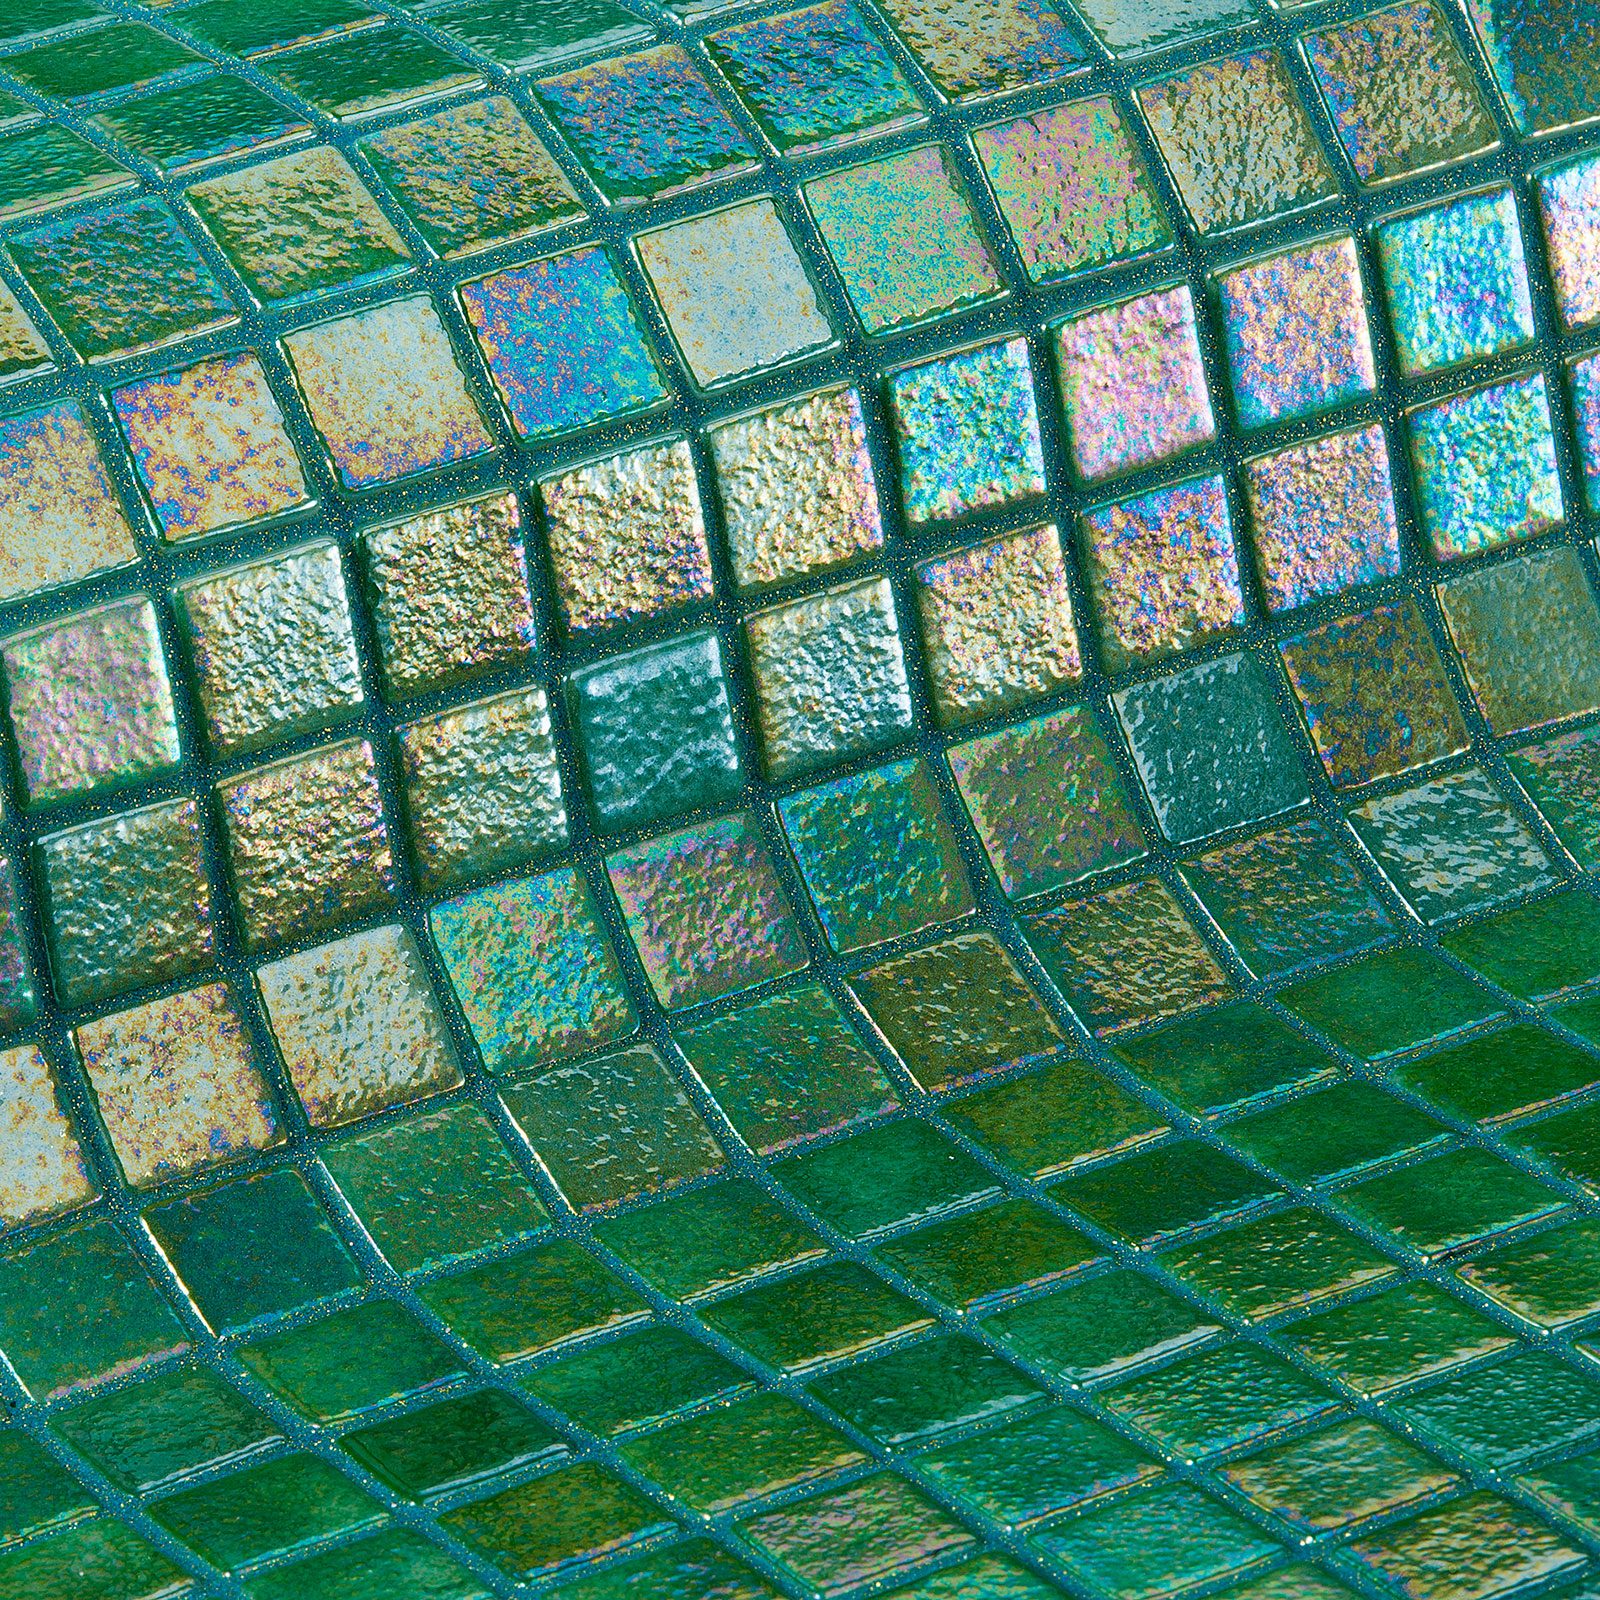 Green Swimming Pool Tiles, Mosaic Tiles Sydney